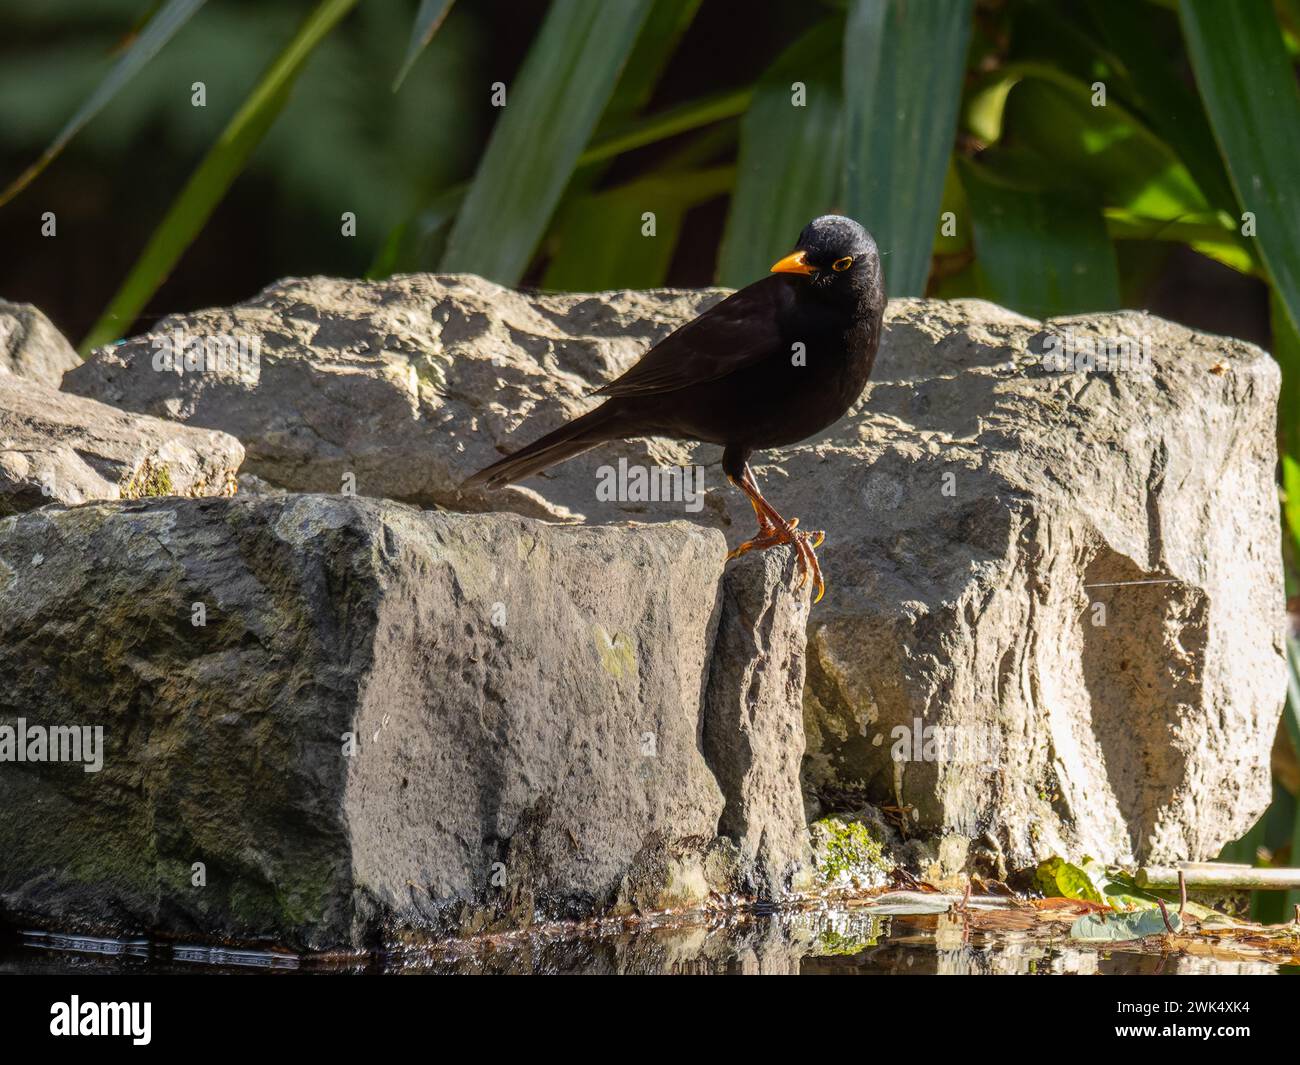 A common blackbird, Turdus merula, also known as the Eurasian blackbird or just blackbird, perched on a rock. Stock Photo